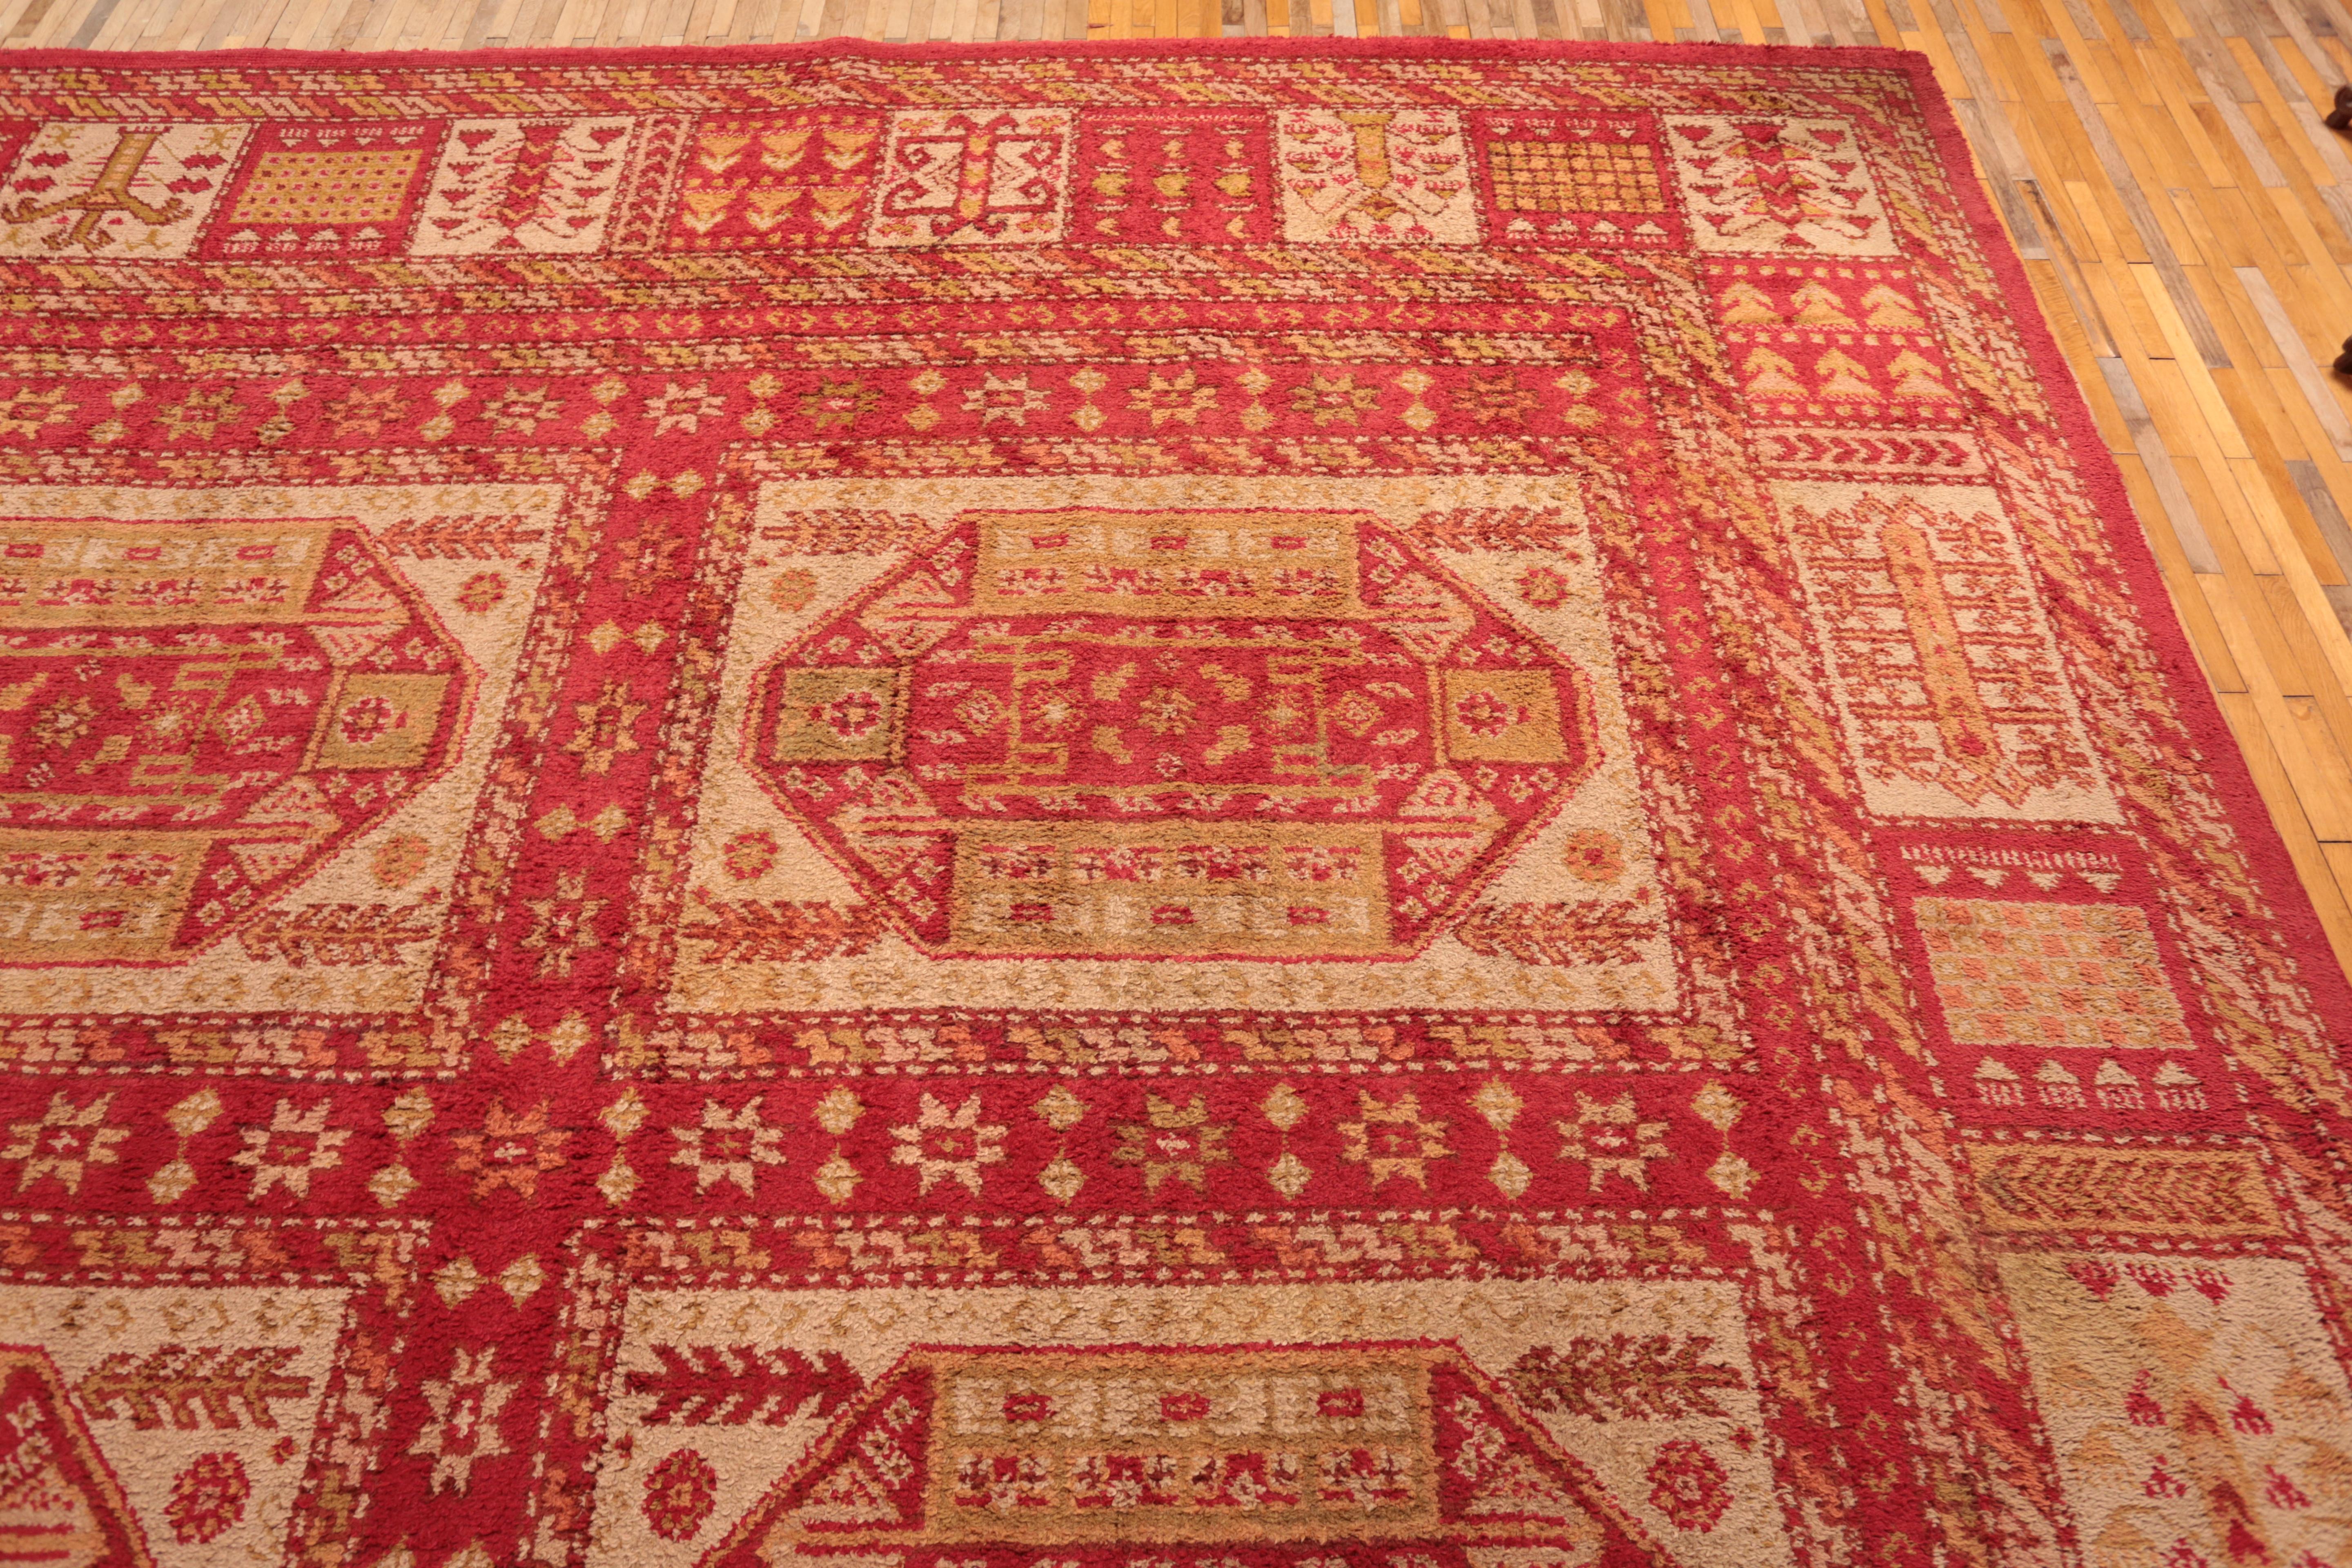 Antique Palace Turkish Ushak Carpet 555 X 375 cm In Good Condition For Sale In STRAČOV, CZ